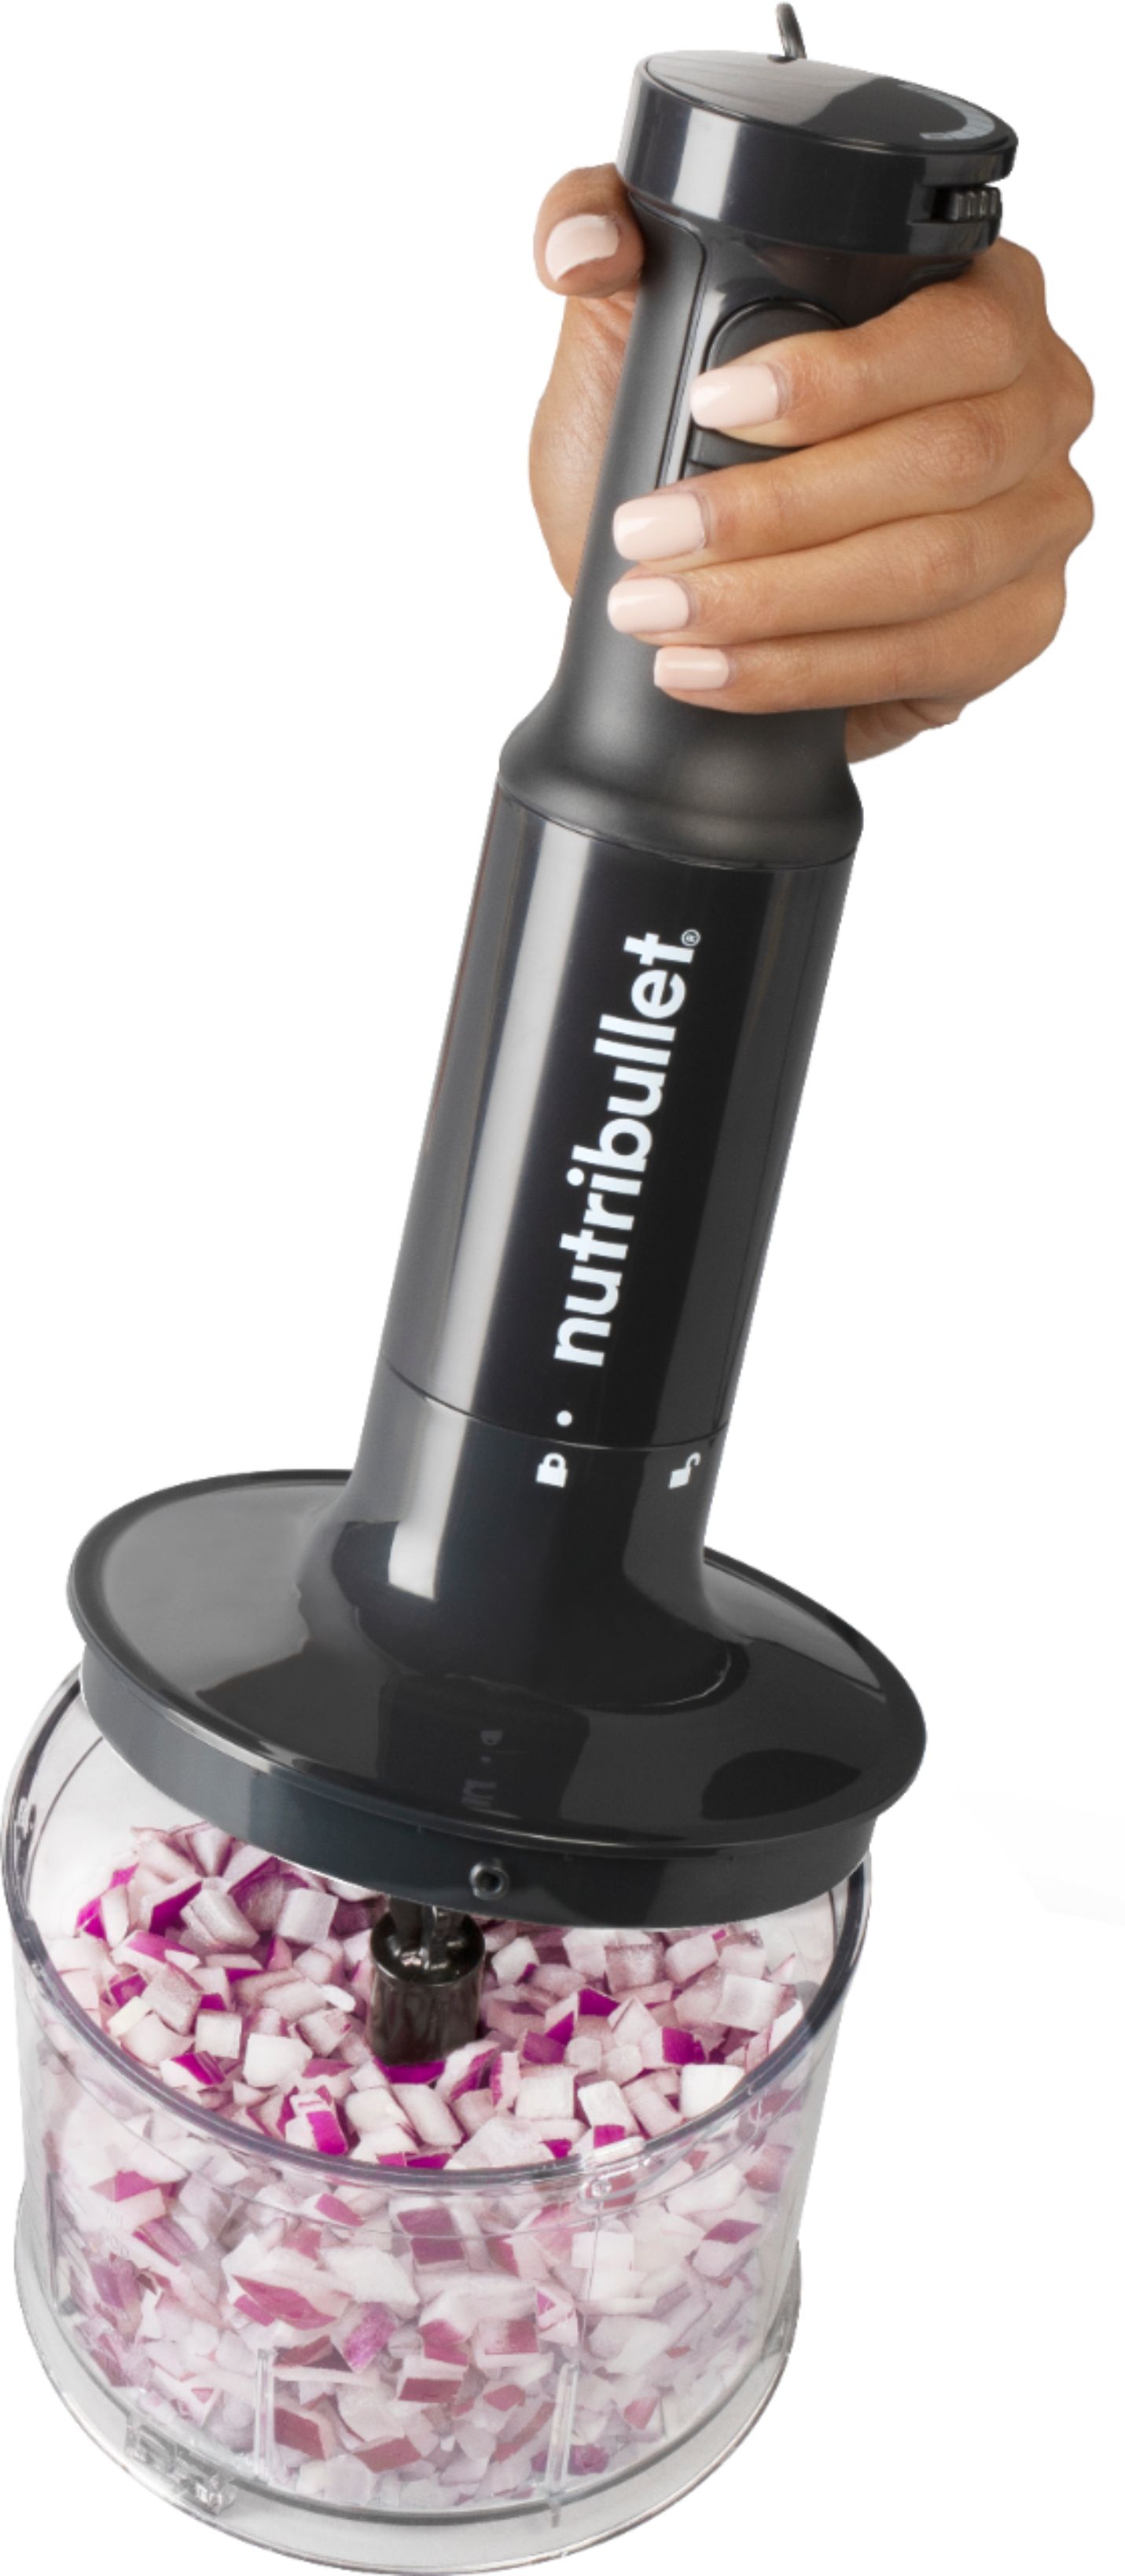 NutriBullet Immersion Blender Deluxe with Whisk and Chopper Attachment  NBI60100 Black NBI60100 - Best Buy